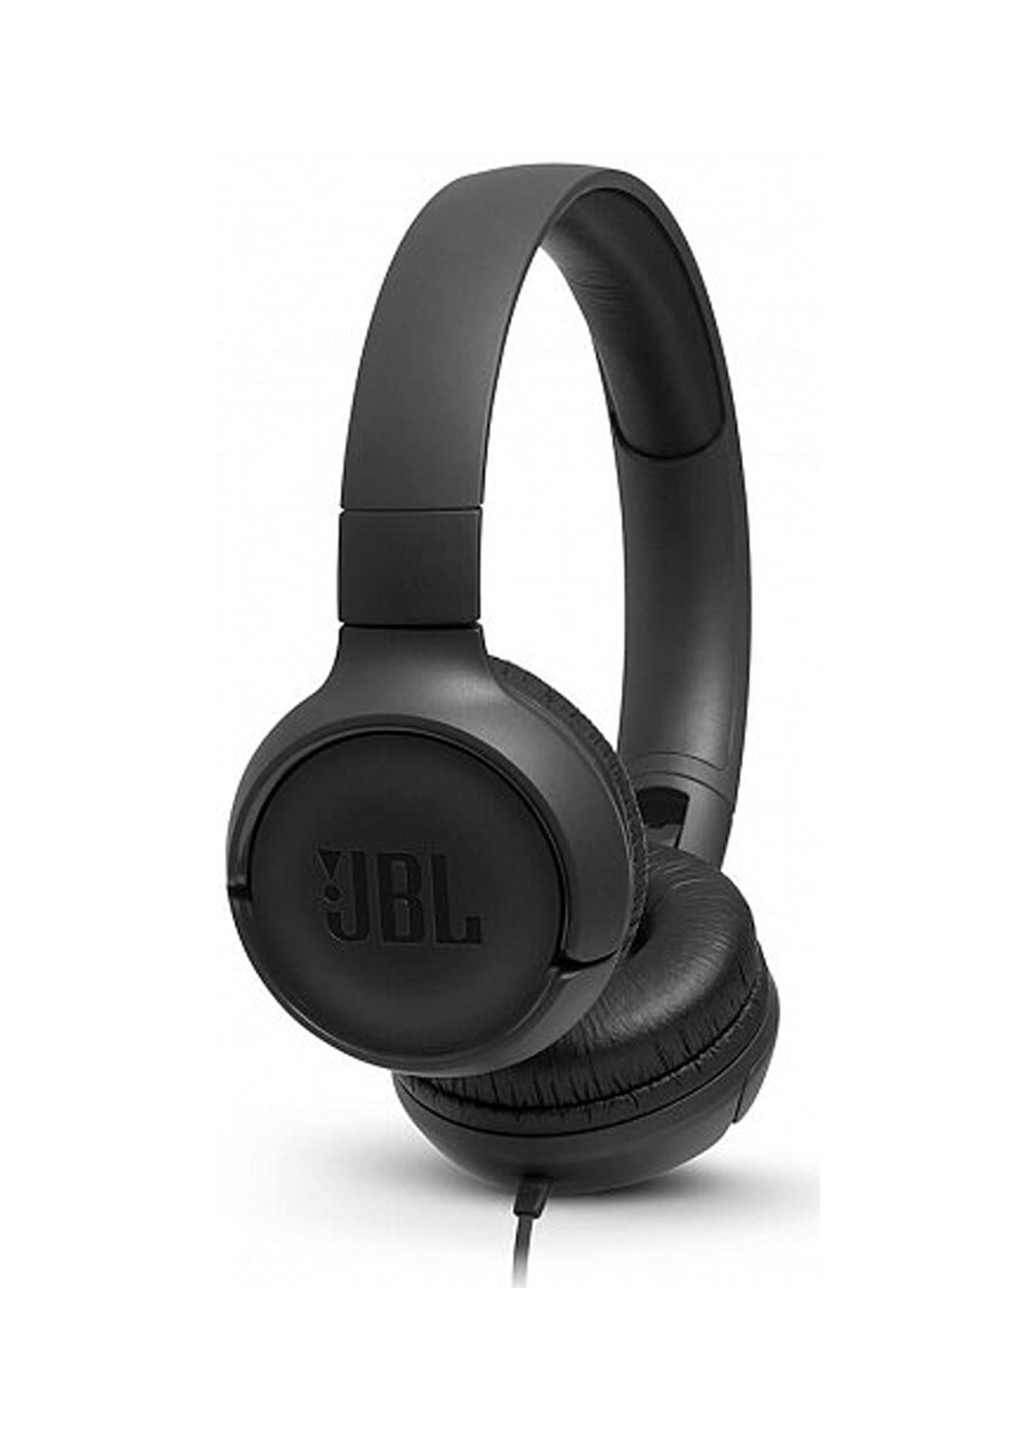 Навушники T500 Black (T500BLK) JBL t500 black (jblt500blk) (160880270)